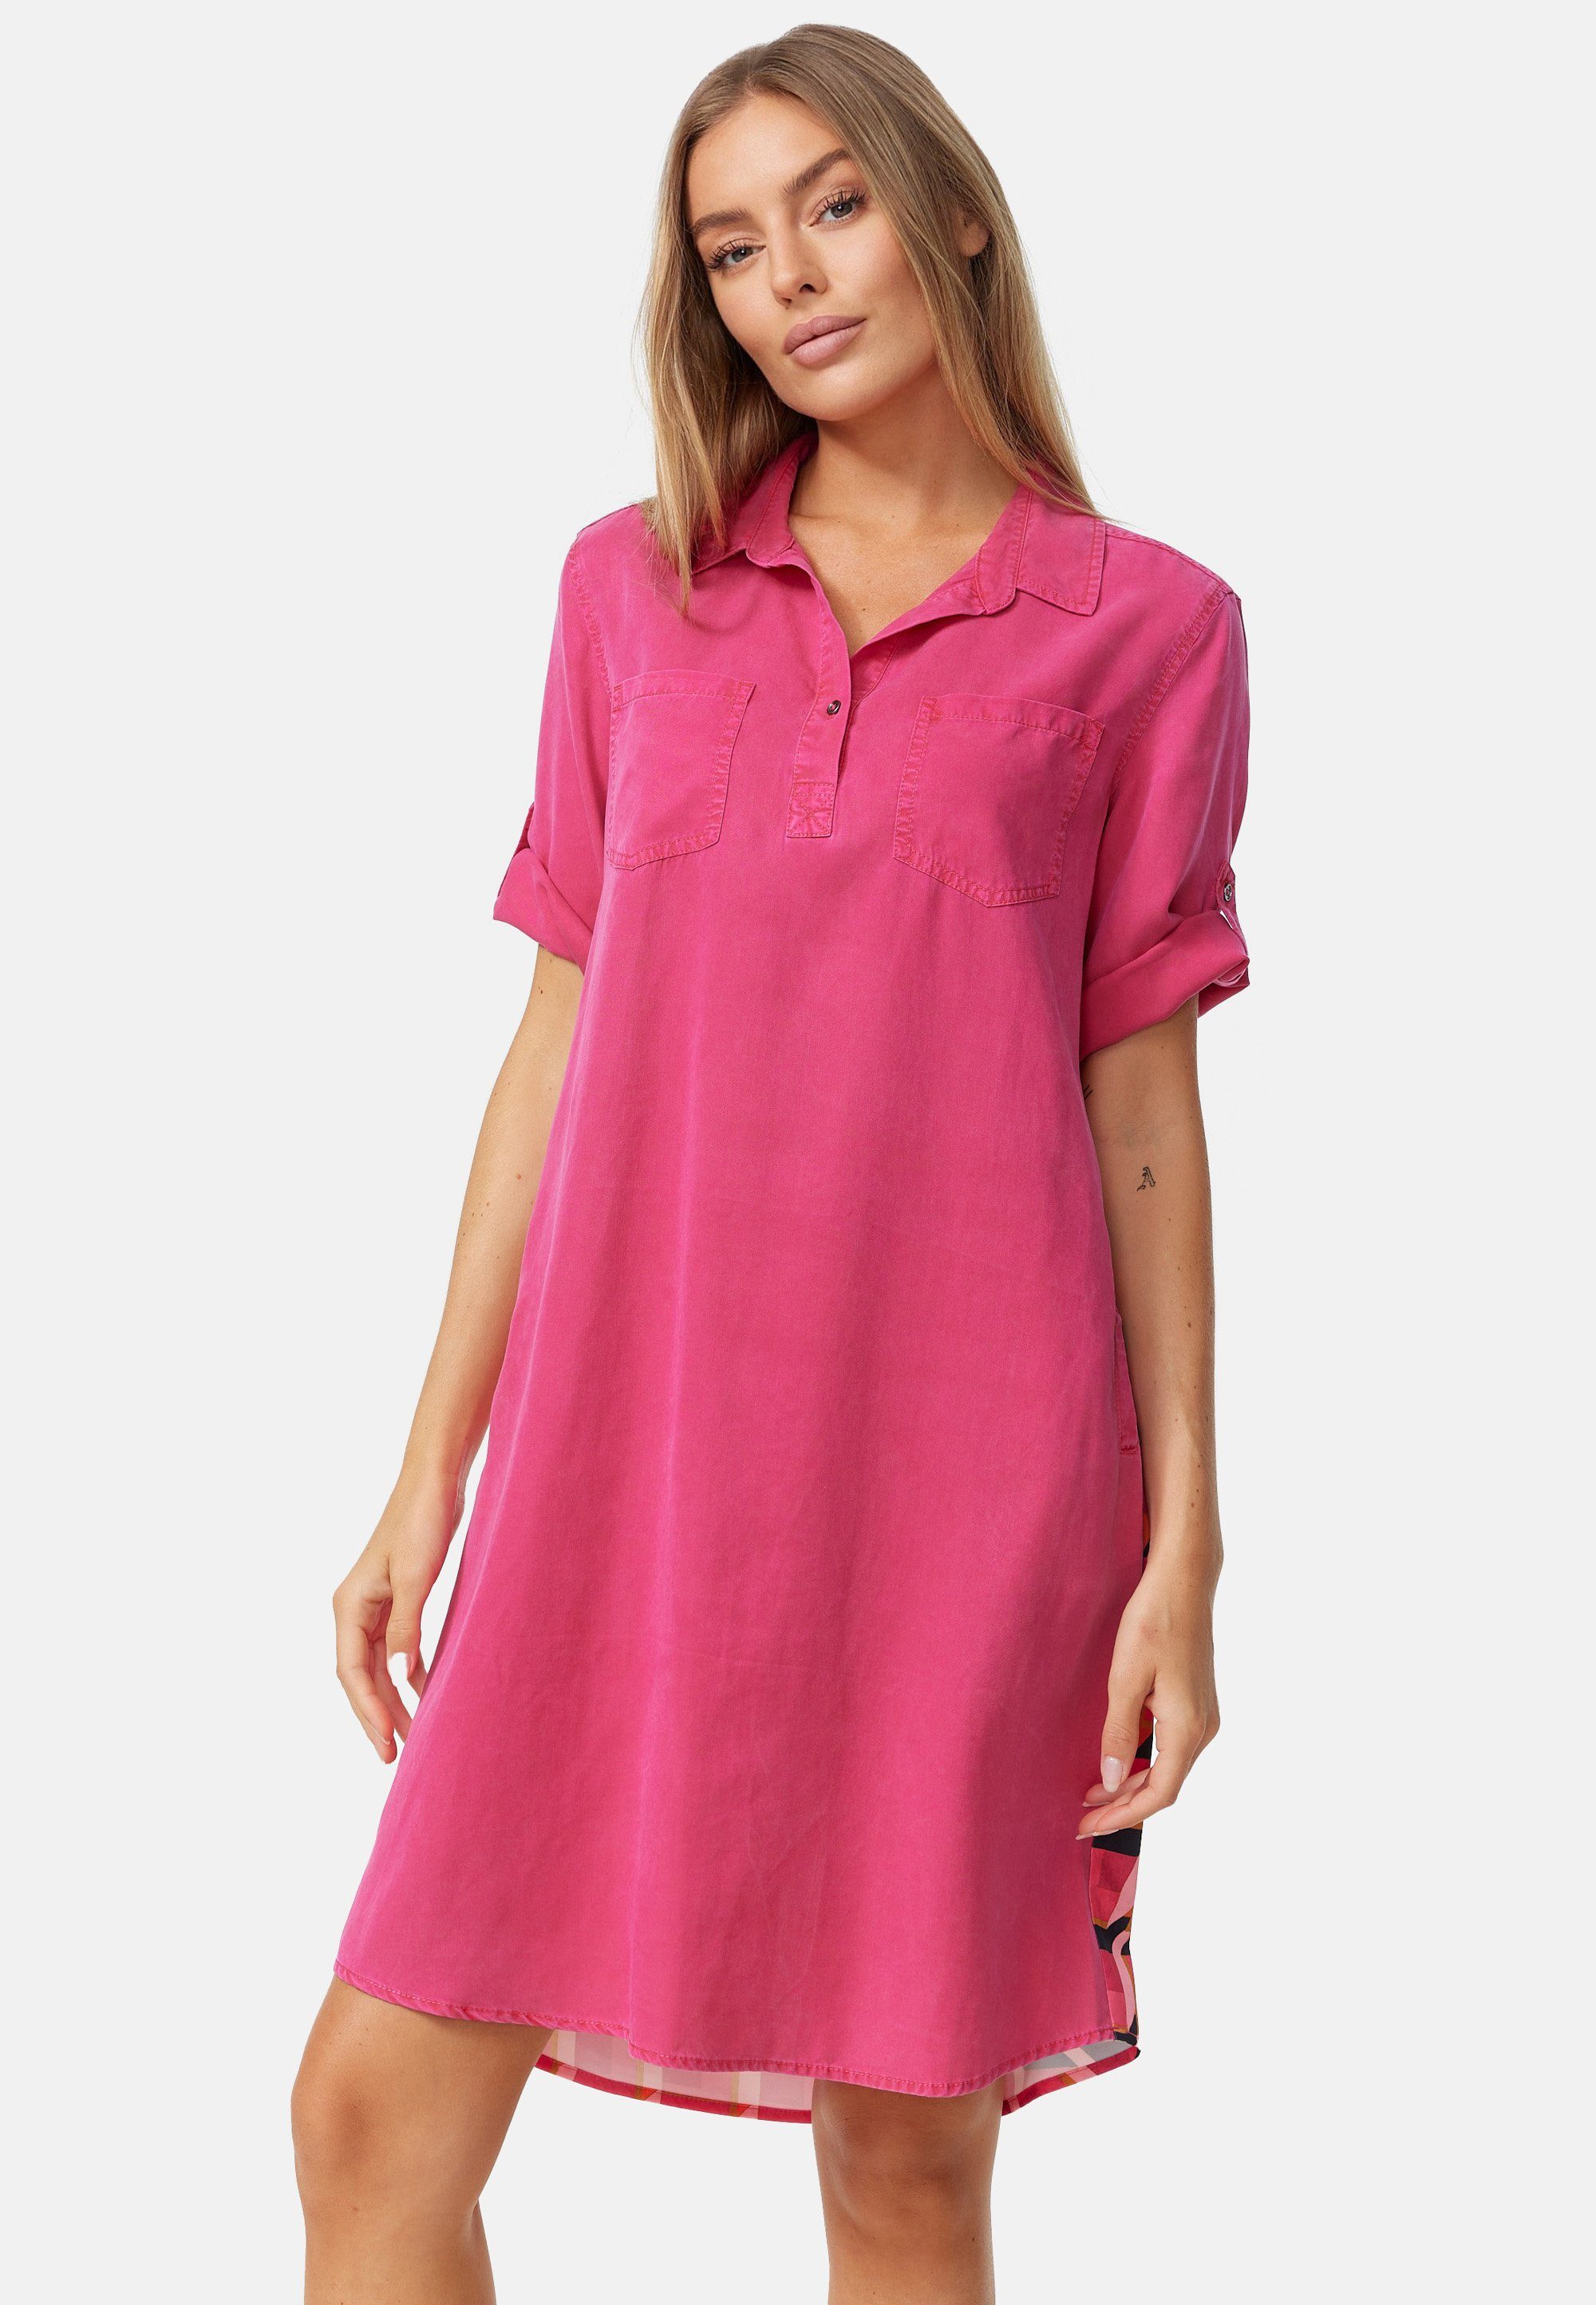 CATNOIR Blusenkleid Garment Dye Kleid 525